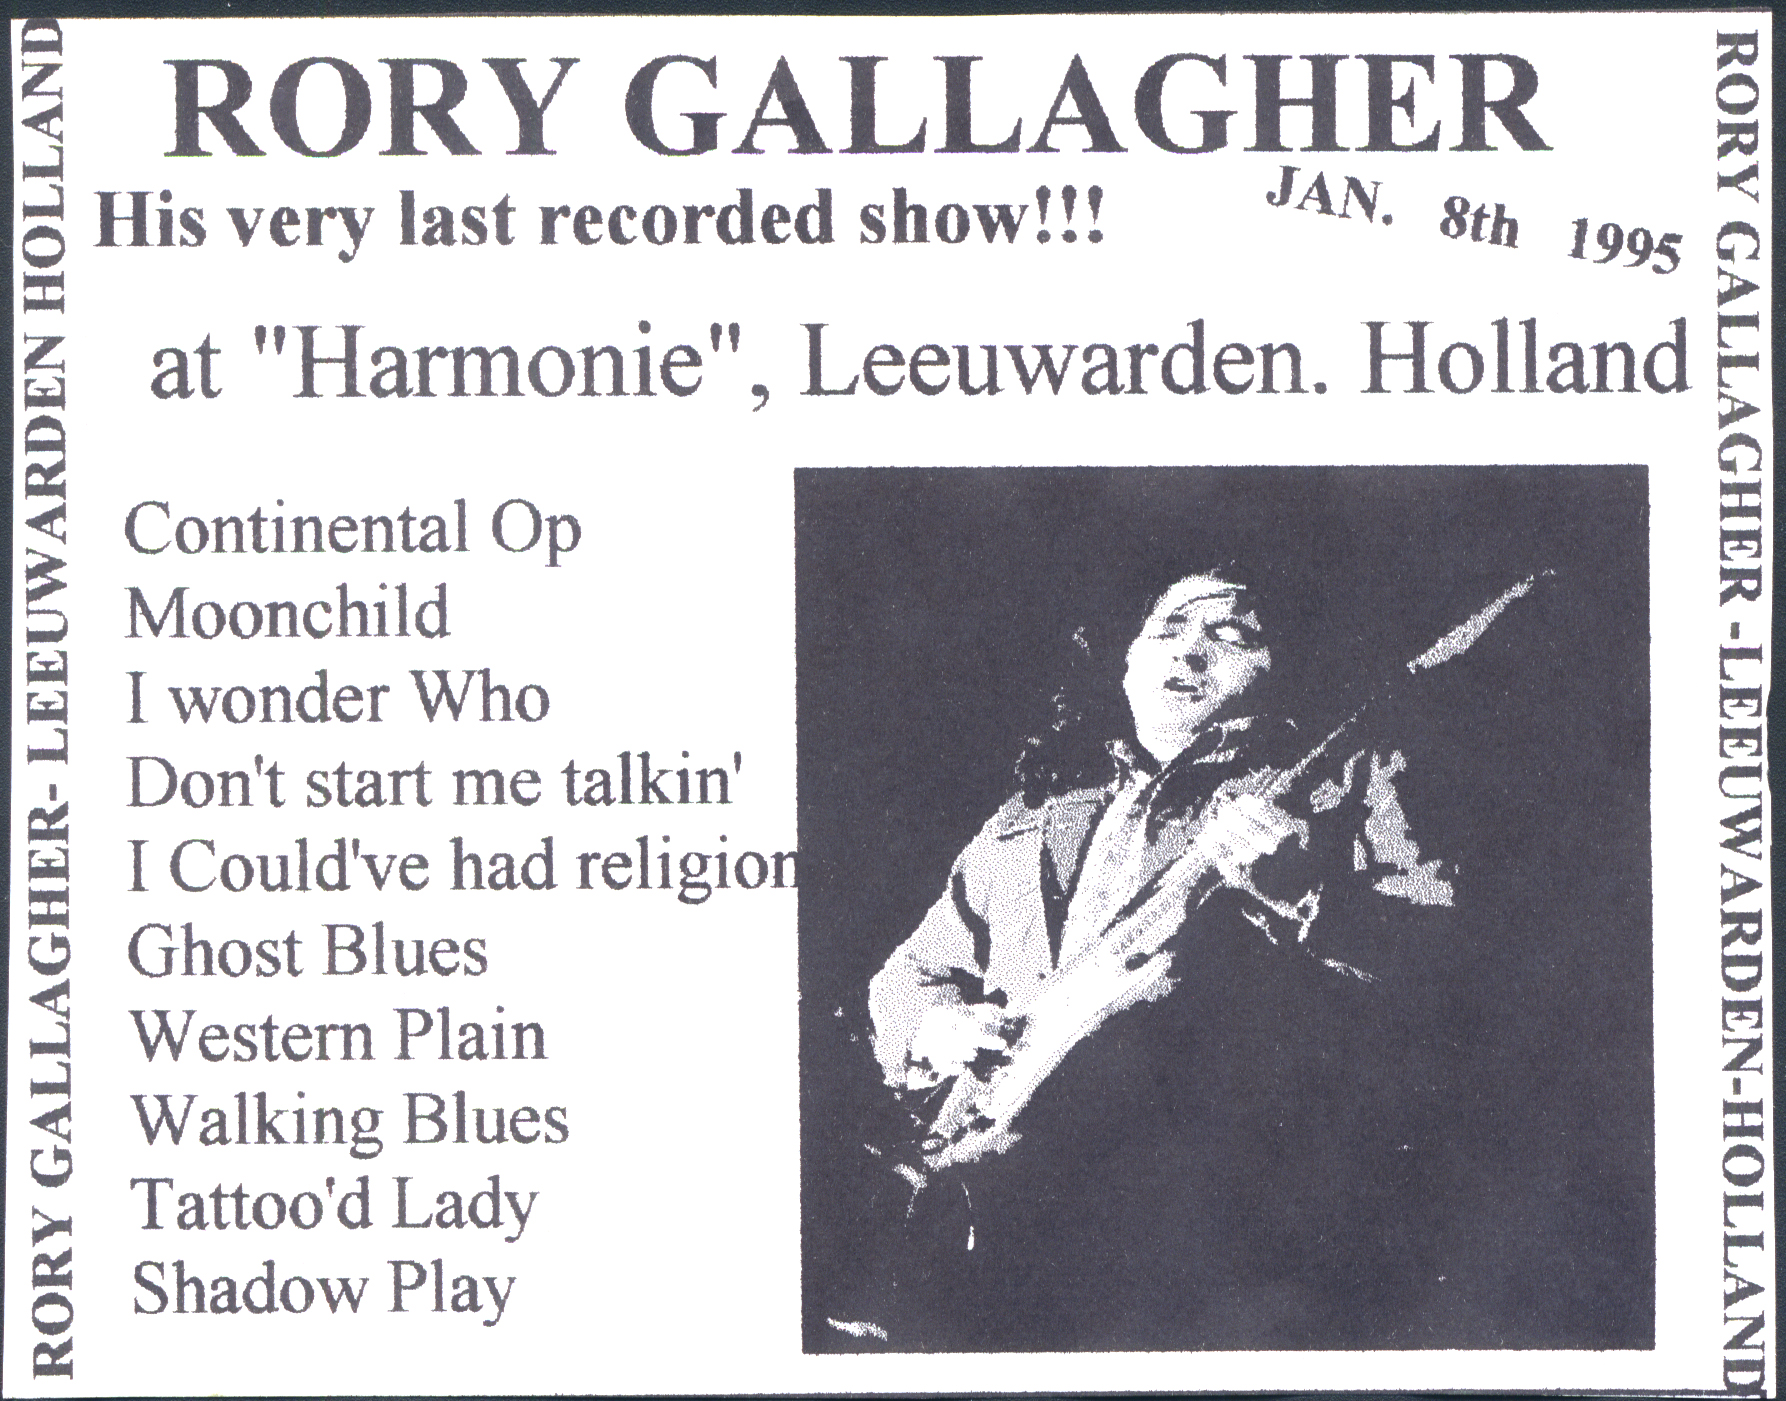 RoryGallagher1995-01-08HarmonieLeeuwardenHolland (2).jpg